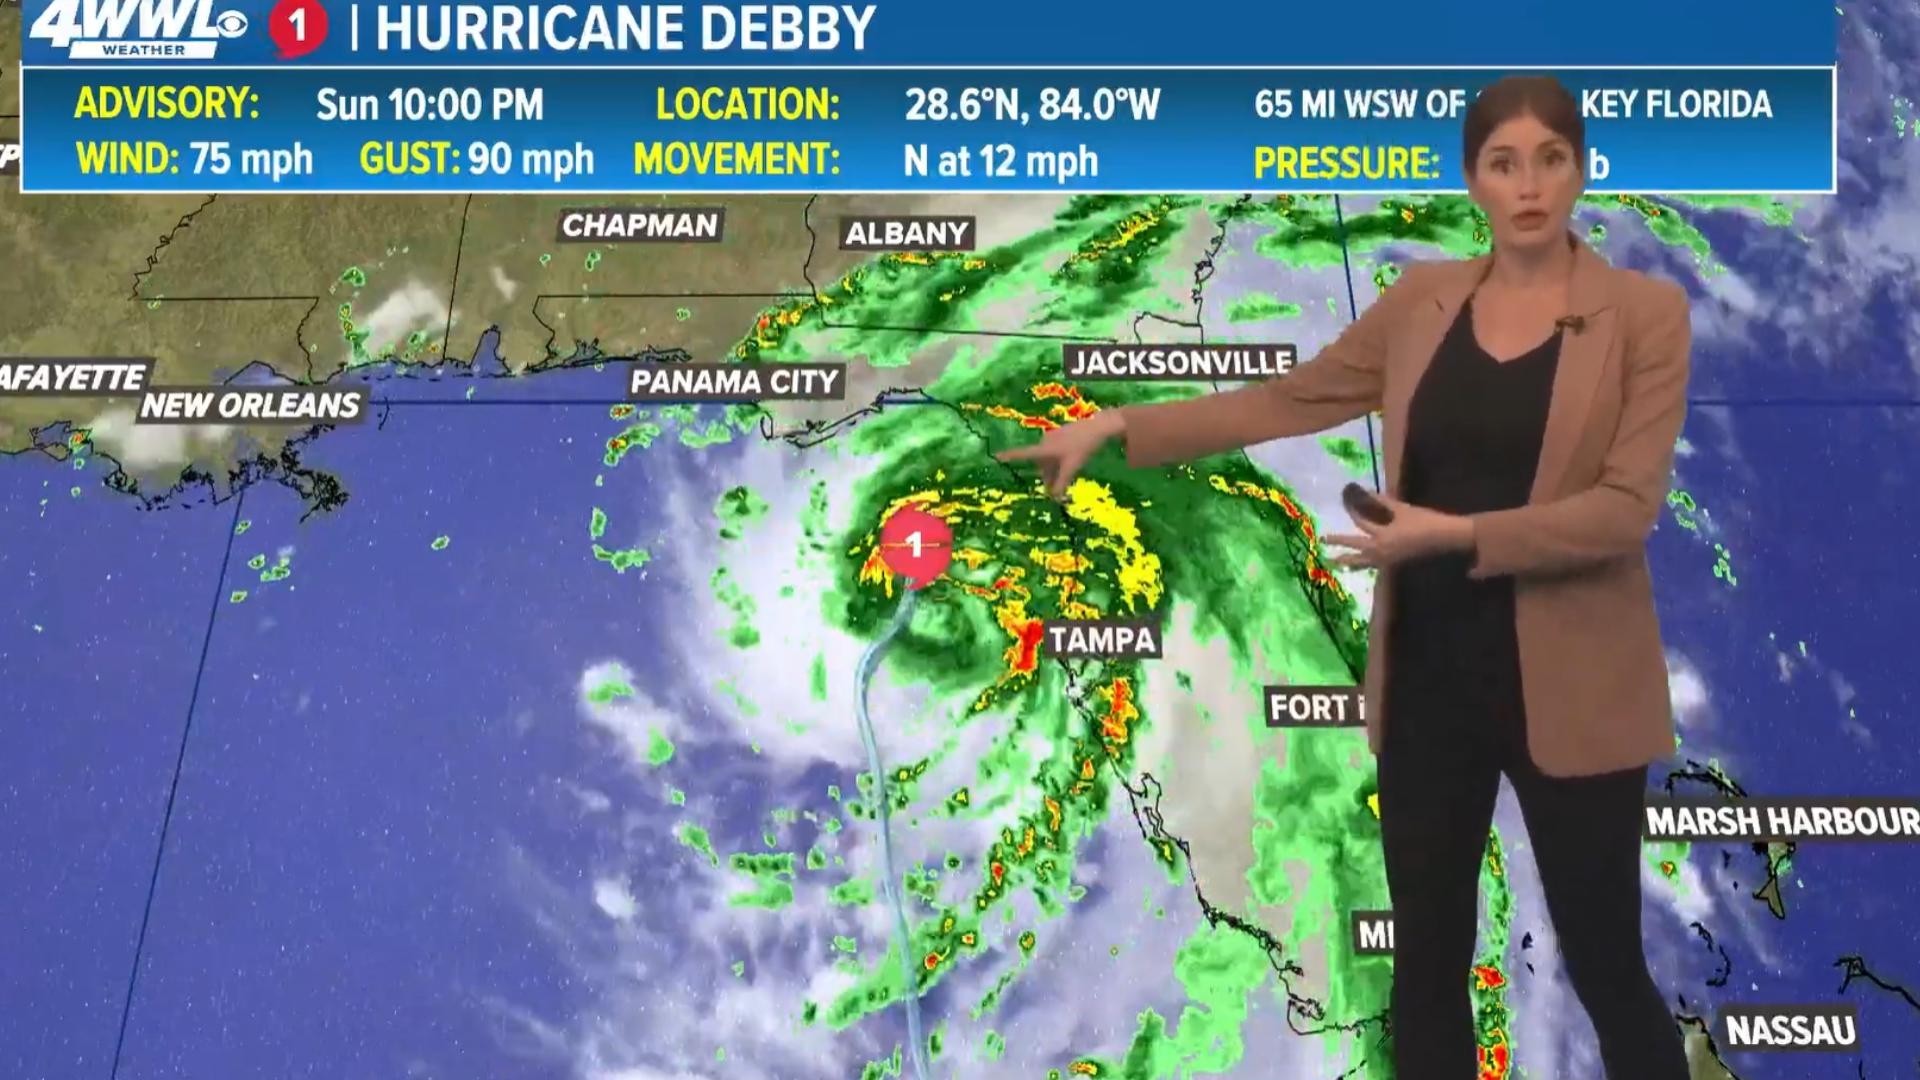 Meteorologist Alexandra Cranford has the latest on Hurricane Debby.